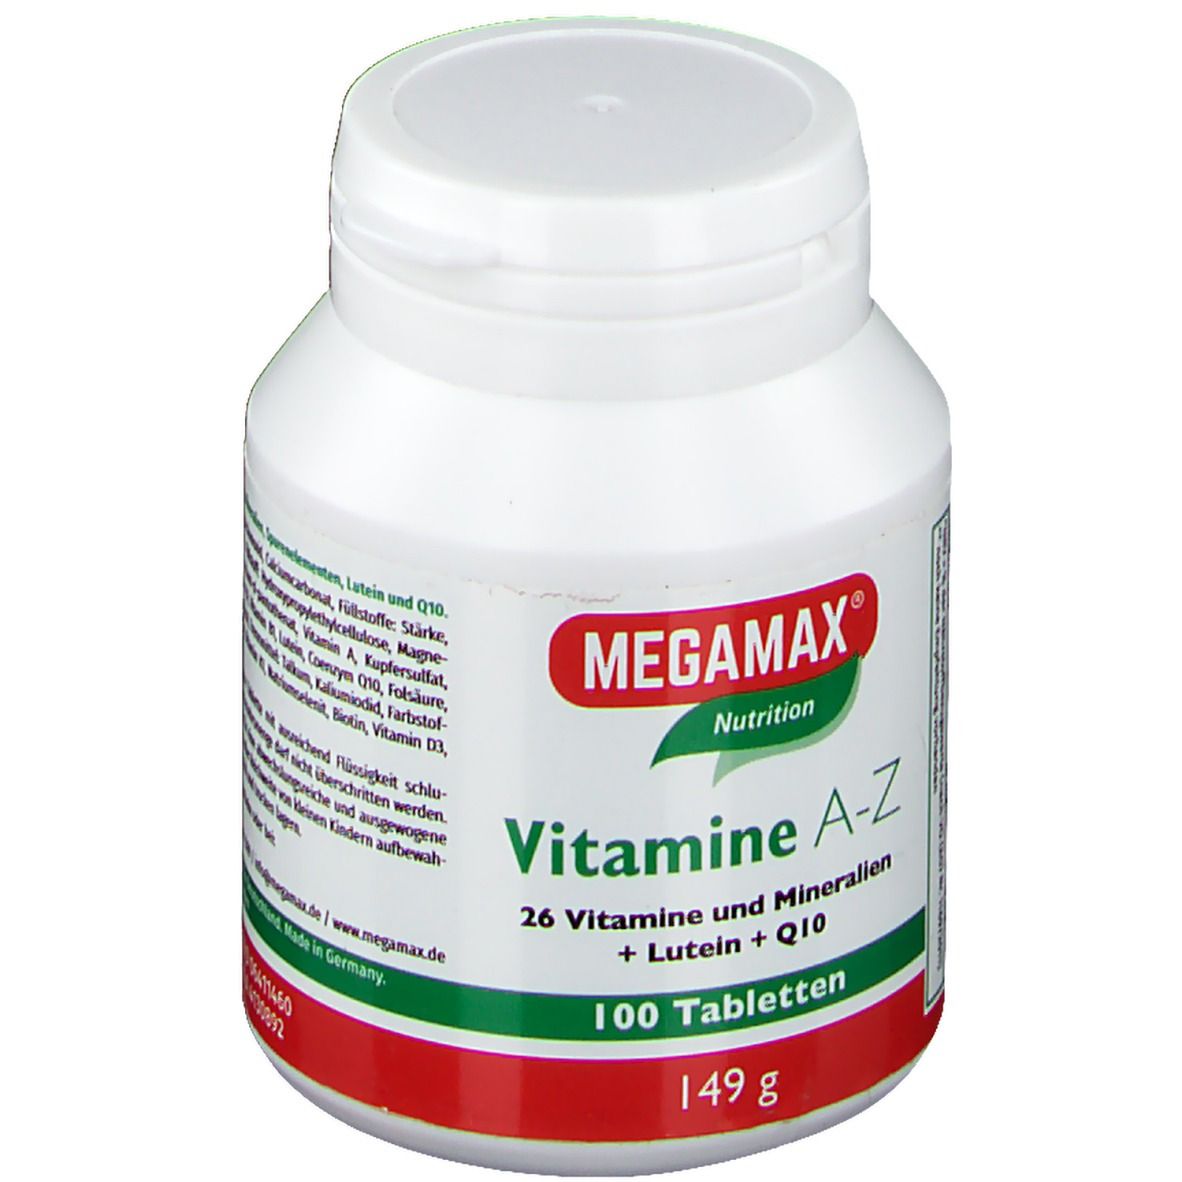 MEGAMAX® Nutrition Vitamine A-Z